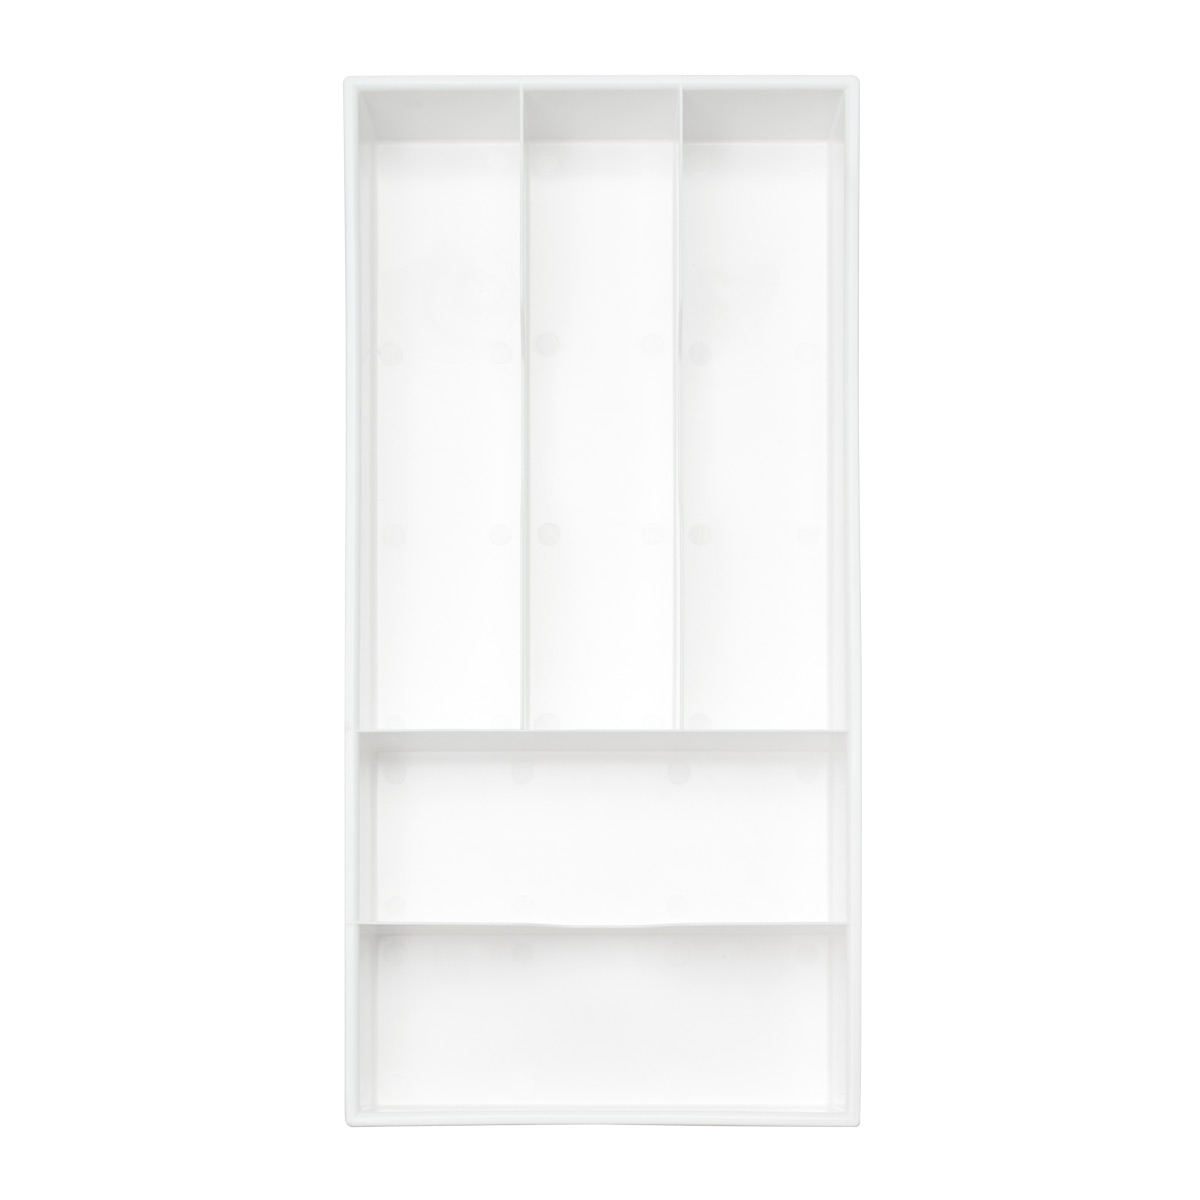 Plast-O-Mat 24 x 20' Clear Ribbed Shelf Liner